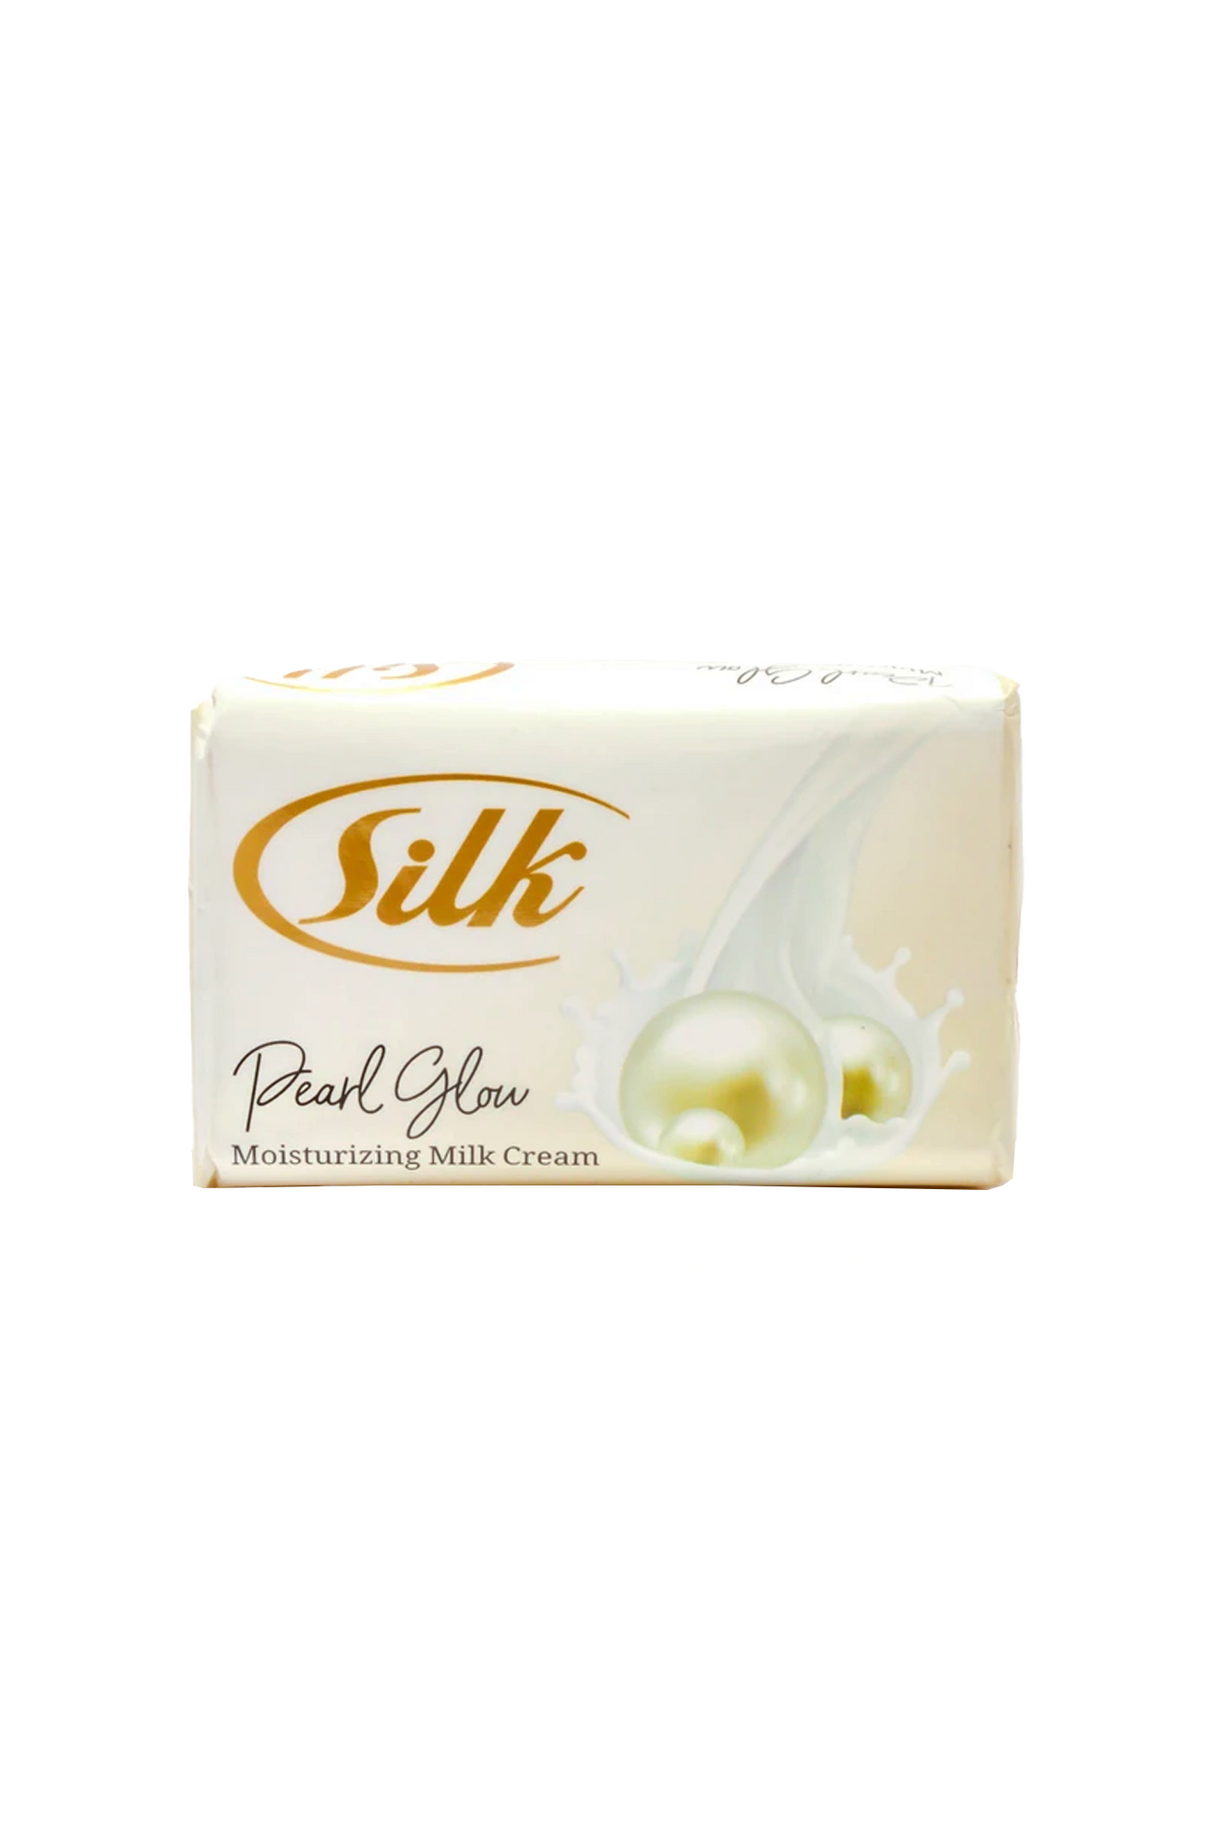 silk soap pearl glow 100g